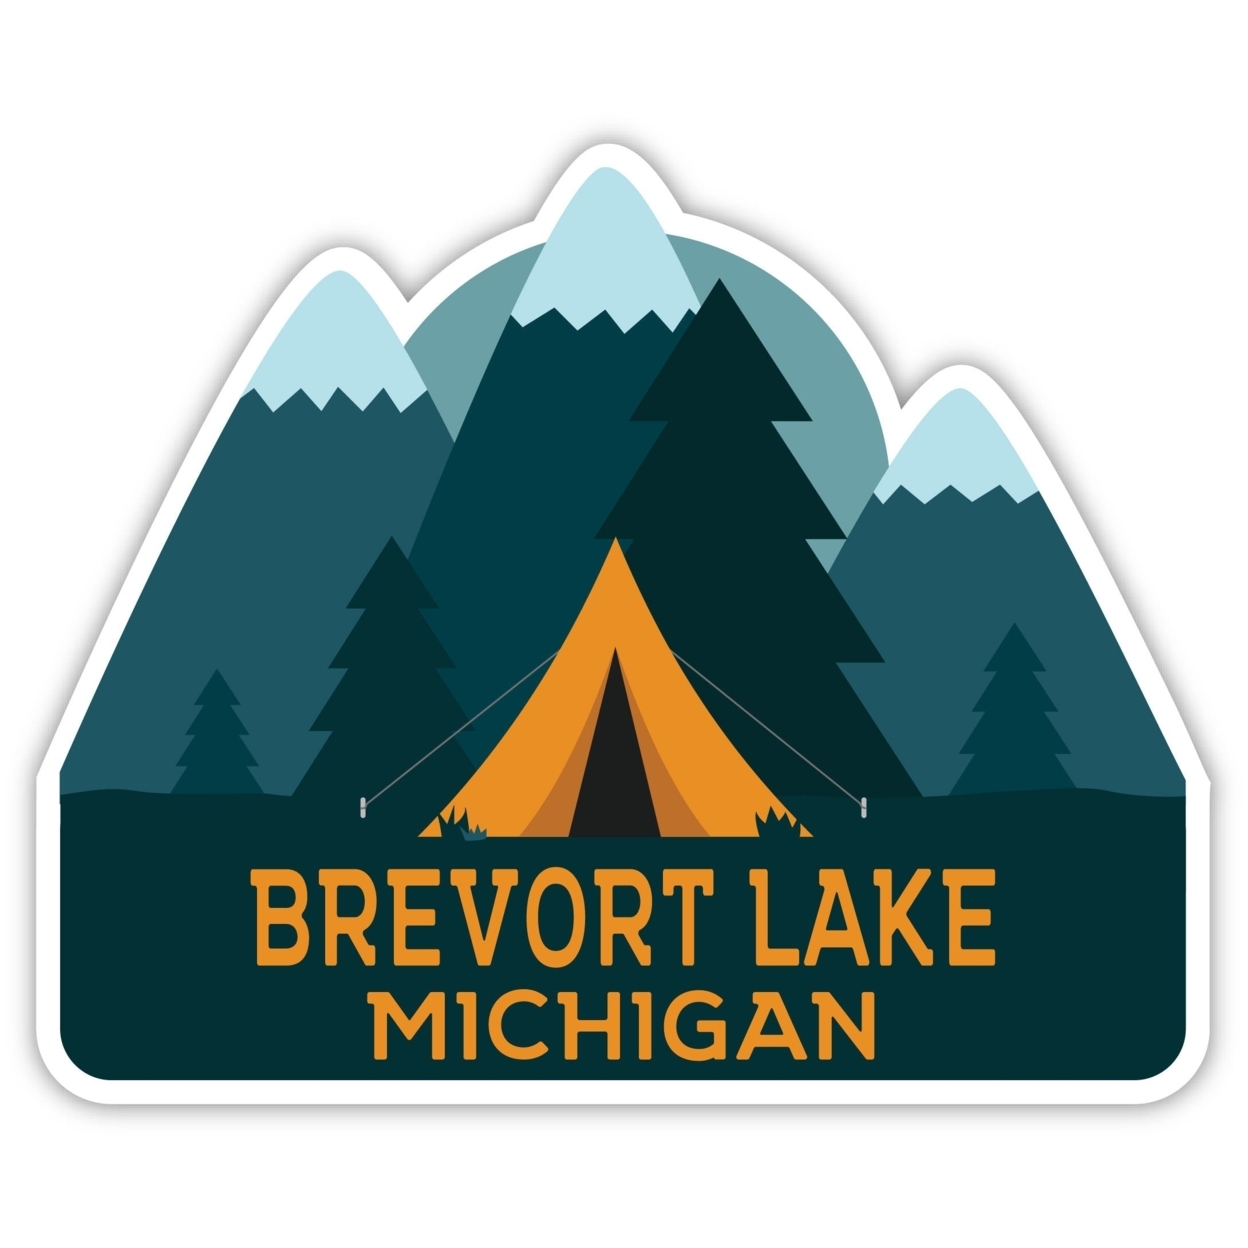 Brevort Lake Michigan Souvenir Decorative Stickers (Choose Theme And Size) - 4-Pack, 12-Inch, Tent